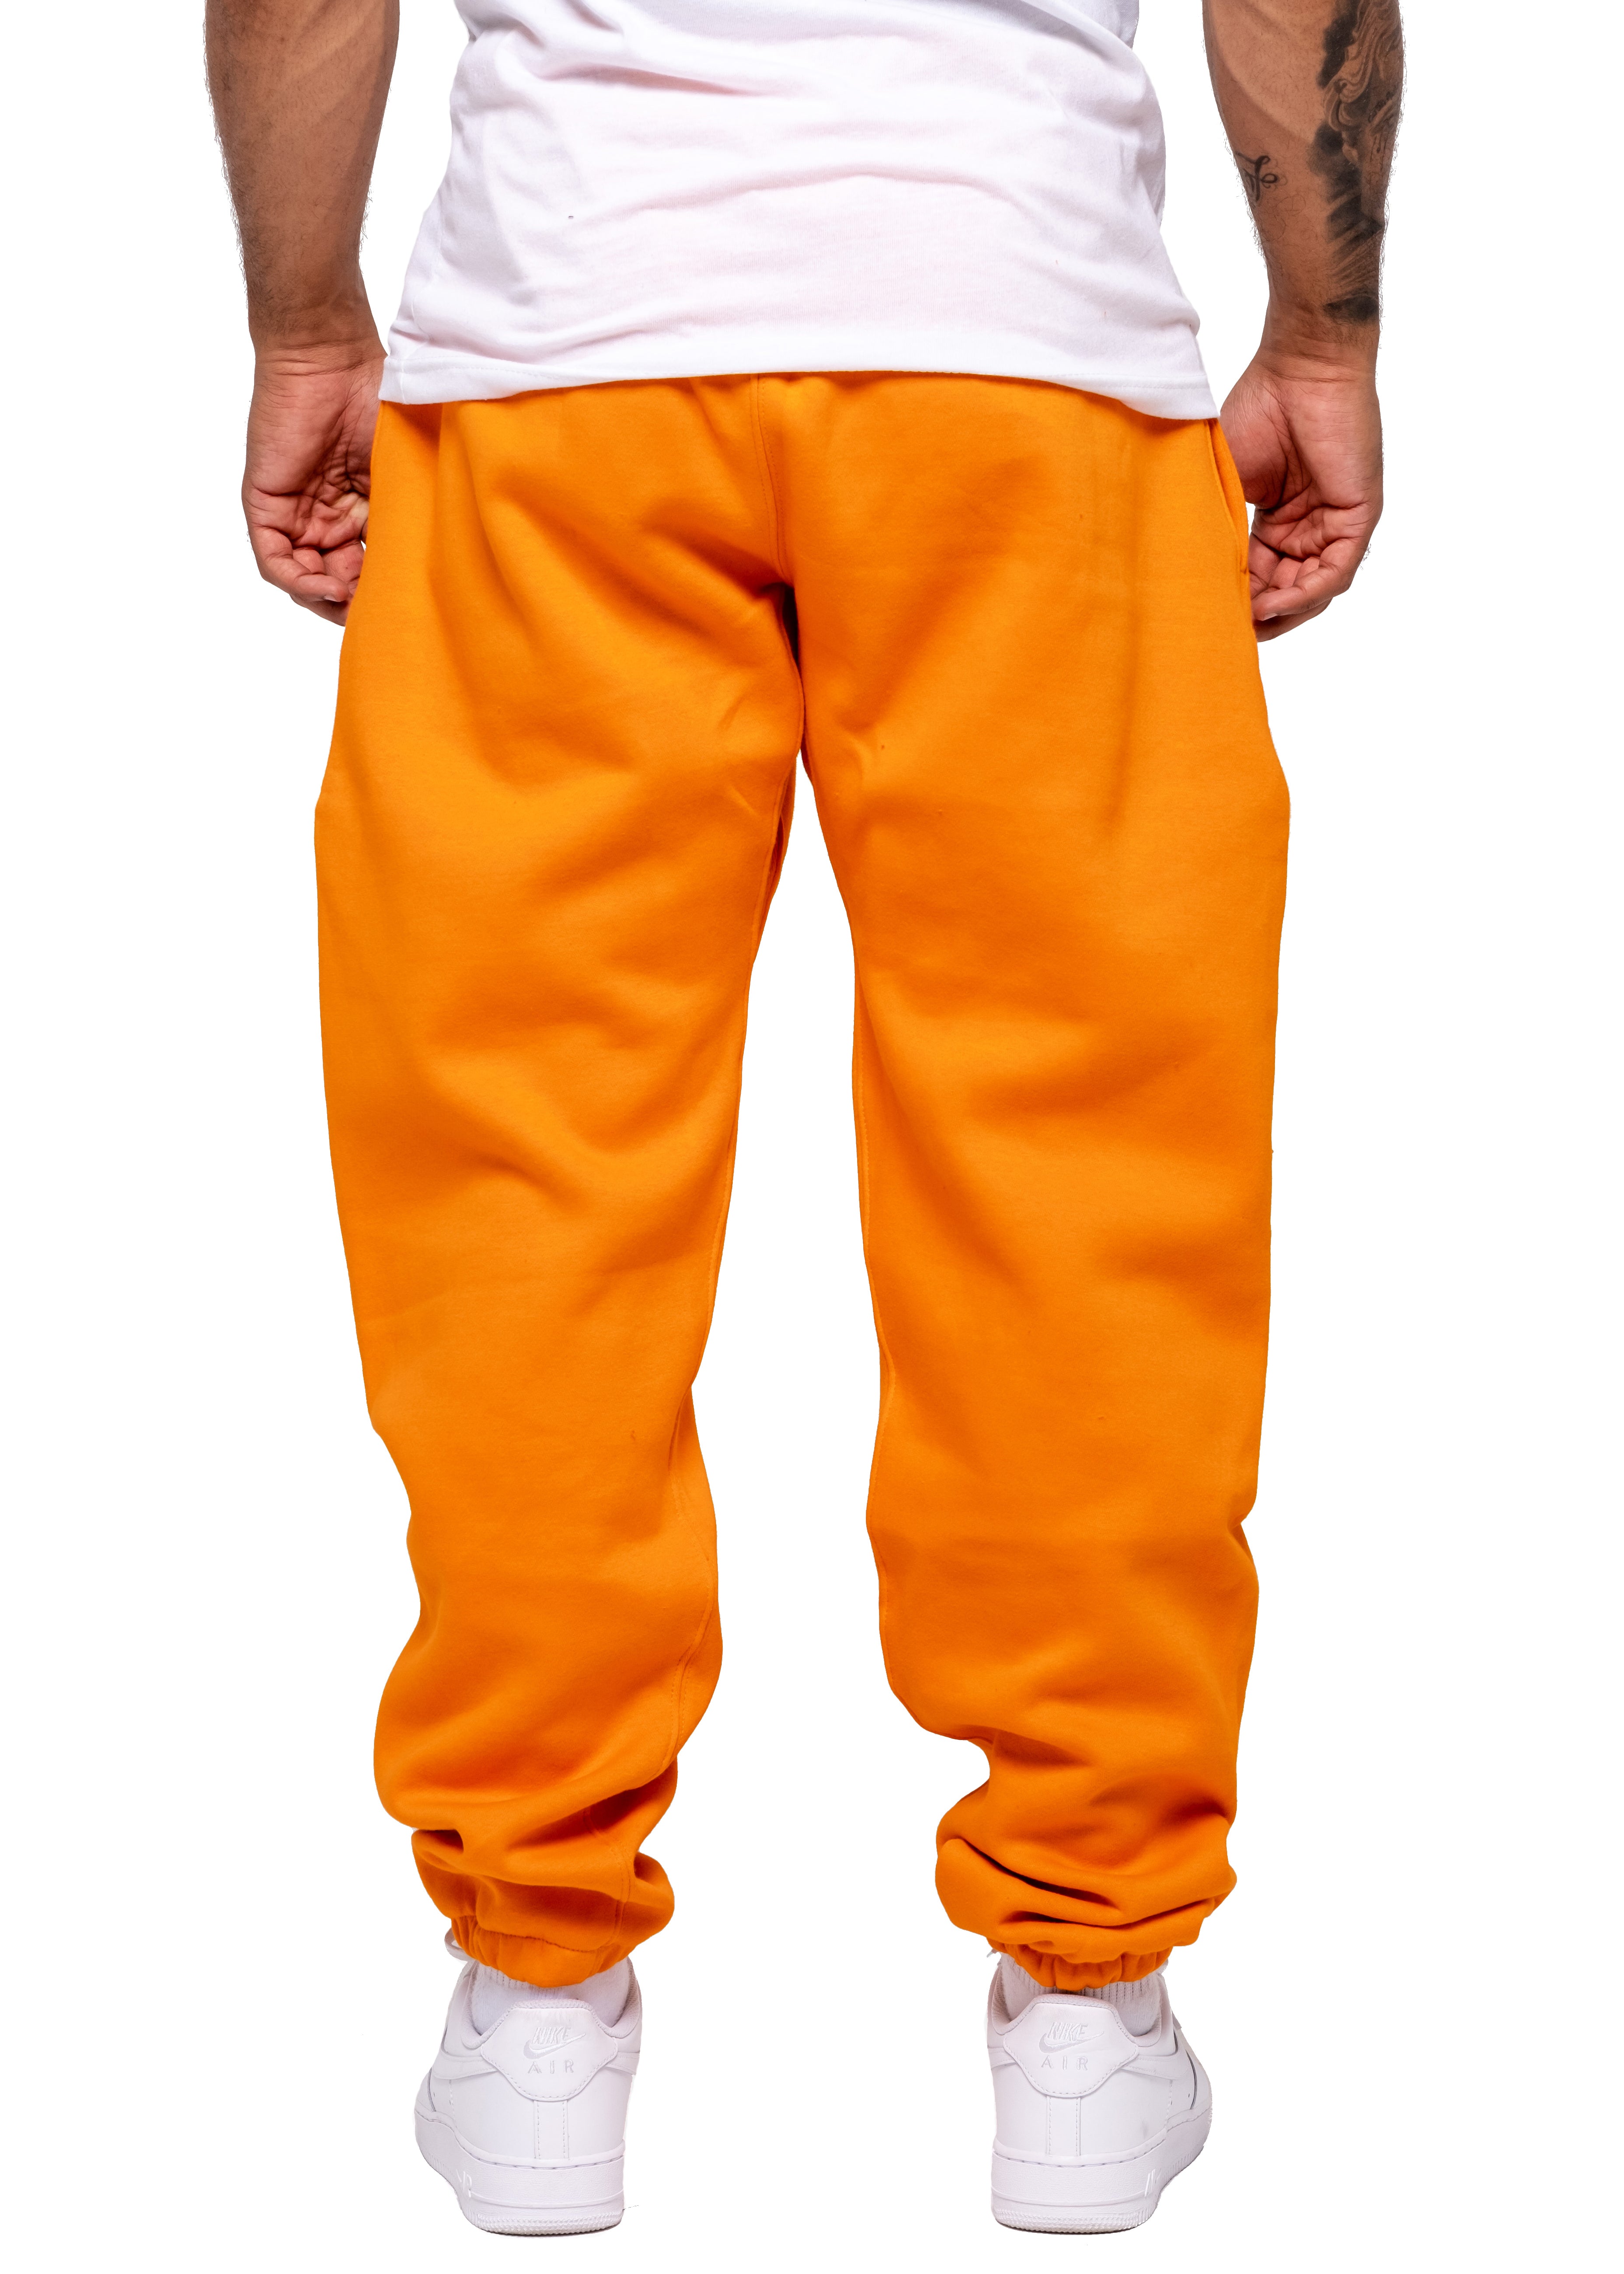 Orange Clover Sweatpants